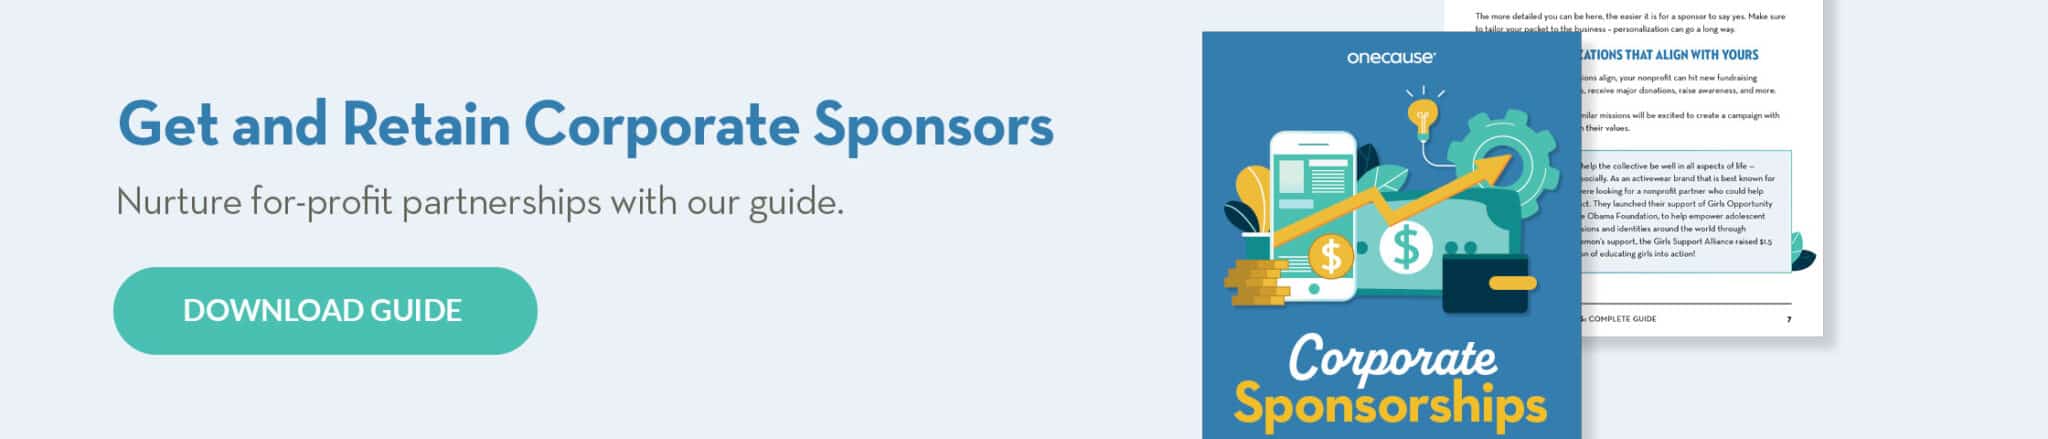 Corporate-Sponsorships-Complete-Guide-eBook-CTA-1